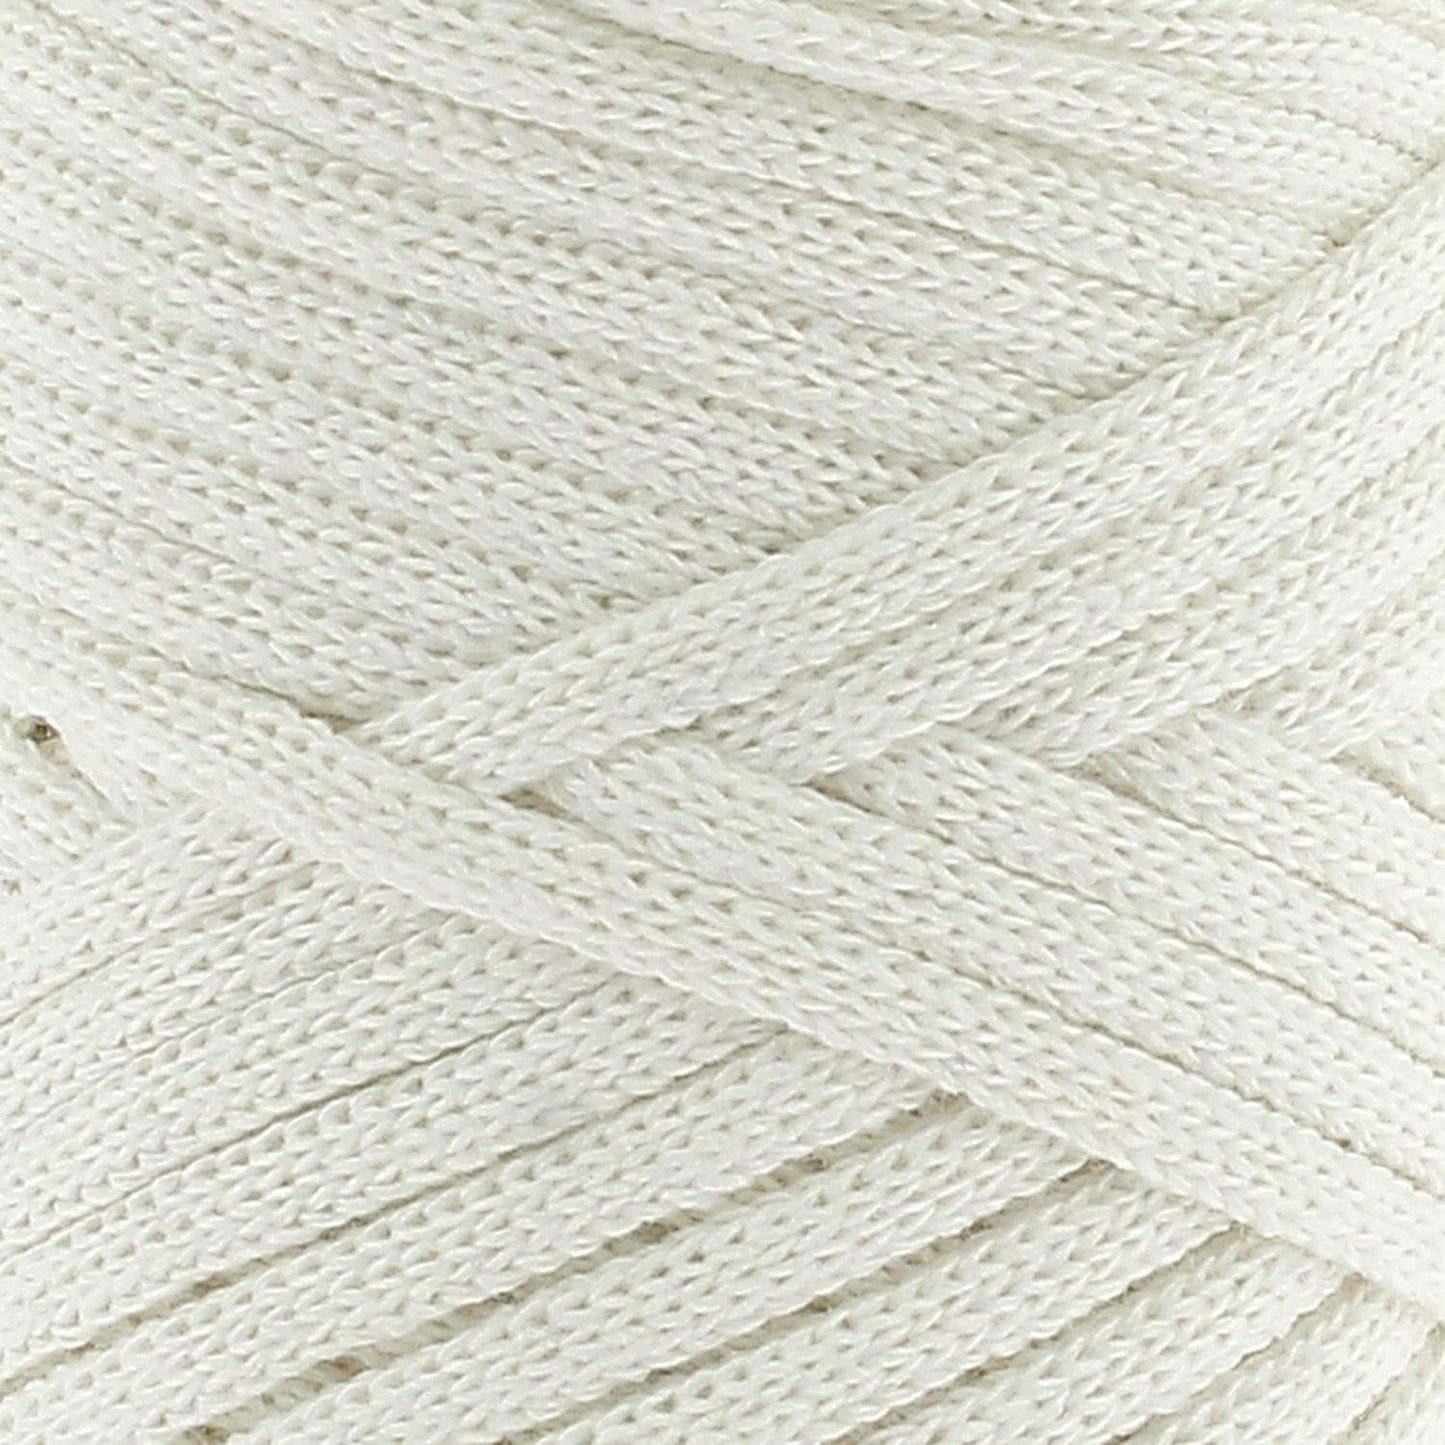 [Hoooked] Cordino Pearl White Cotton Macrame Cord - 54M, 150g